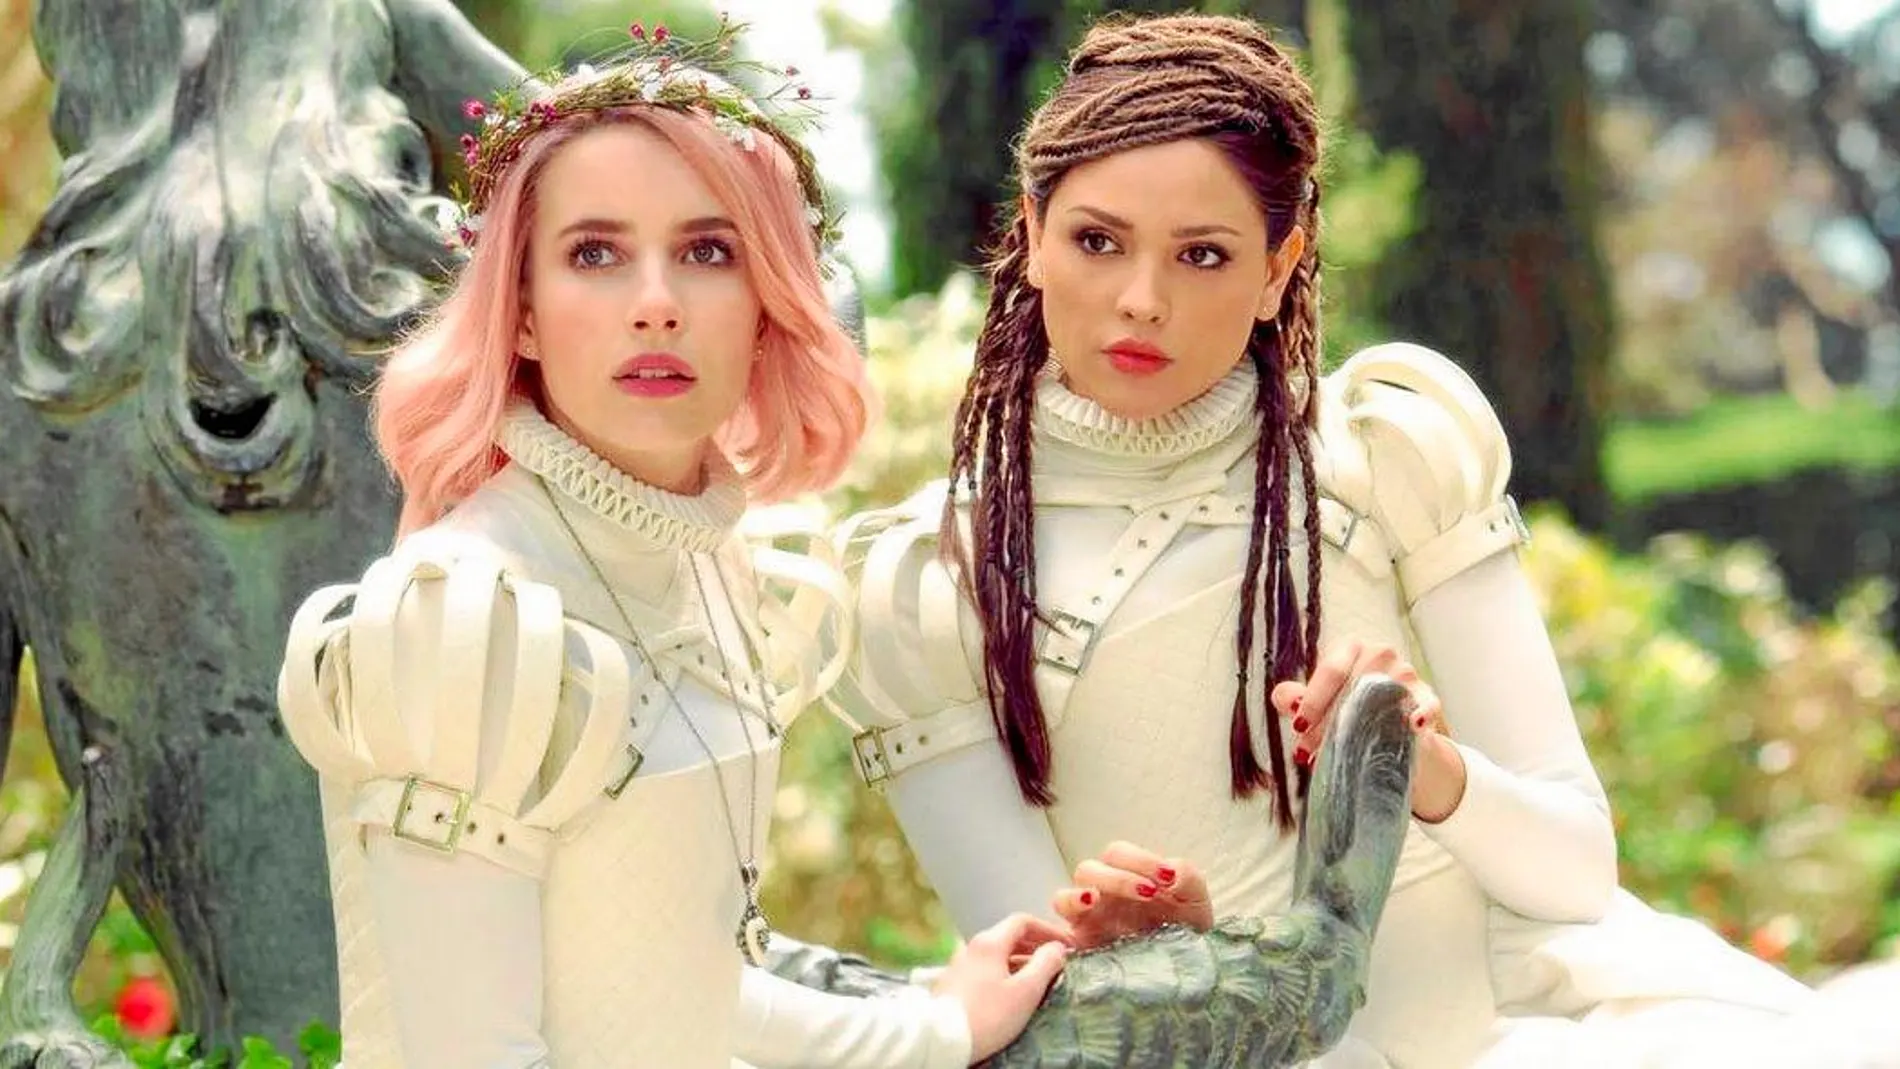 Emma Roberts y Eiza González protagonizan una historia de amor en "Paradise Hills"